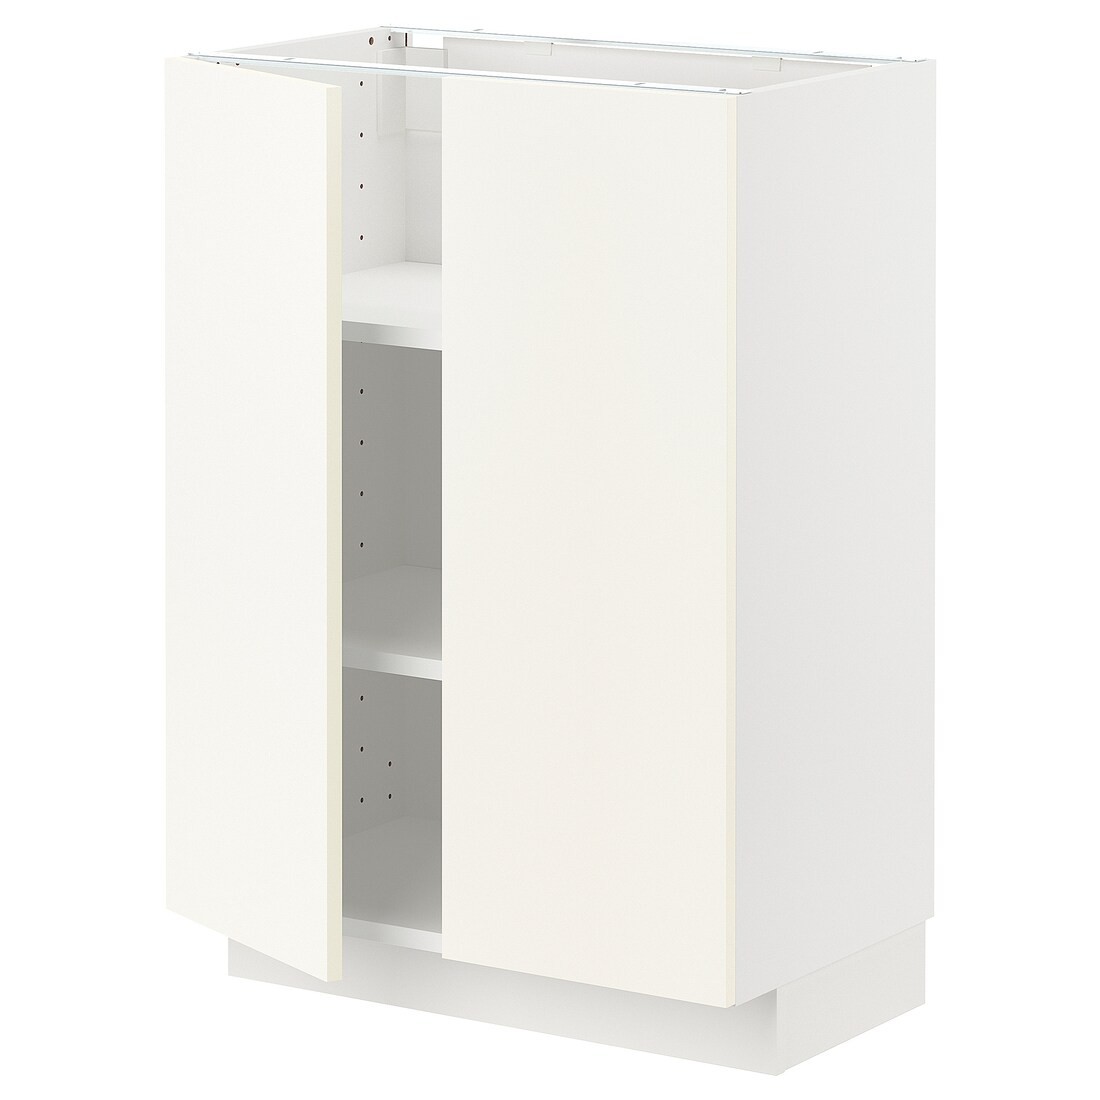 IKEA METOD МЕТОД Напол шкаф с полками / 2 двери, белый / Vallstena белый 39507135 395.071.35